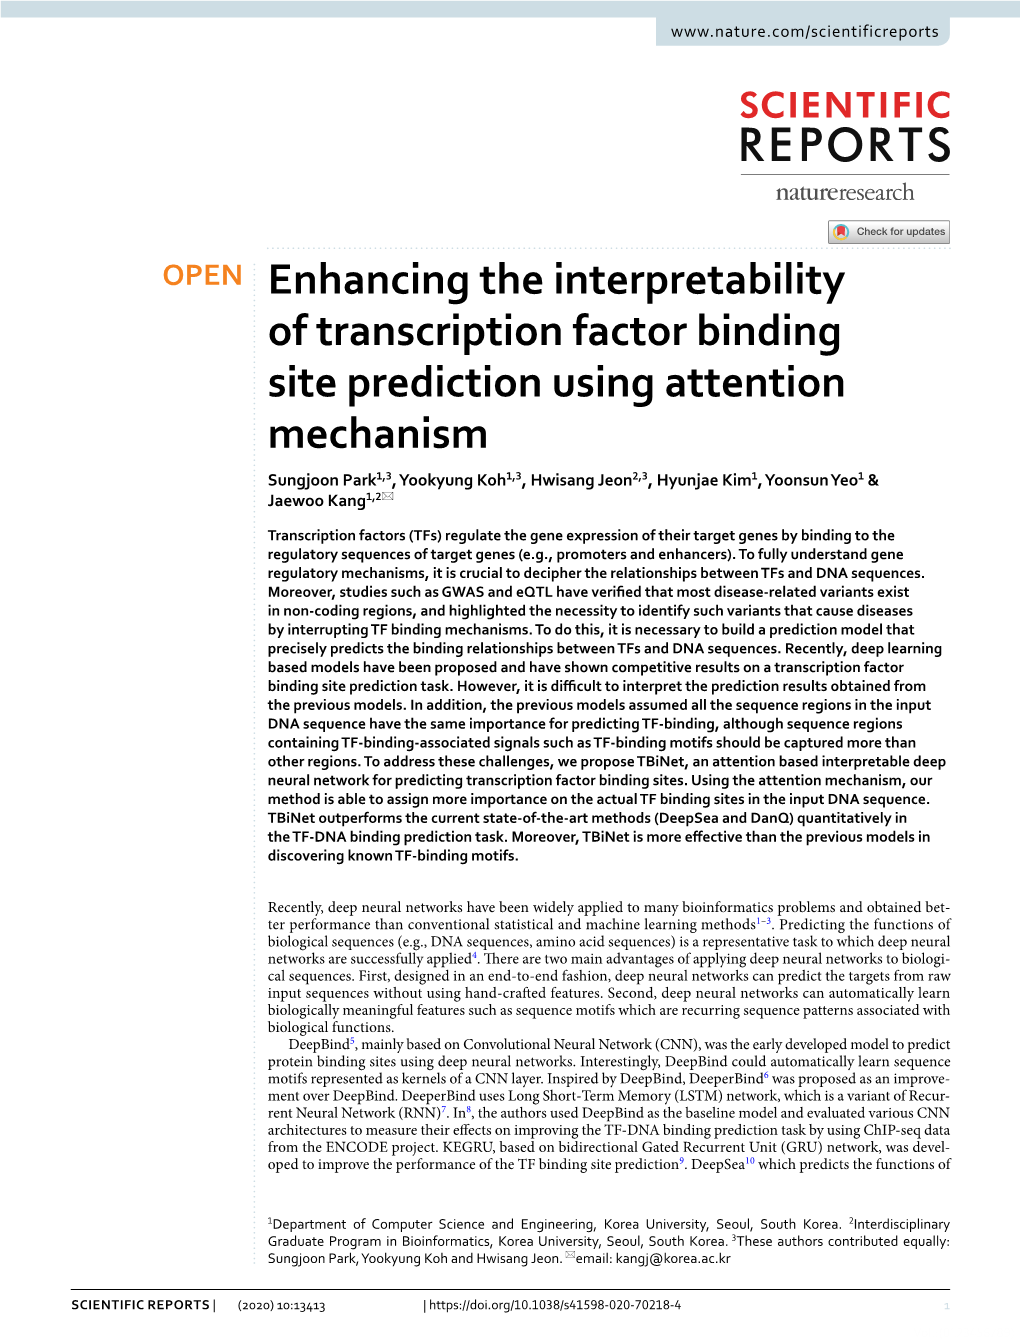 Enhancing the Interpretability of Transcription Factor Binding Site